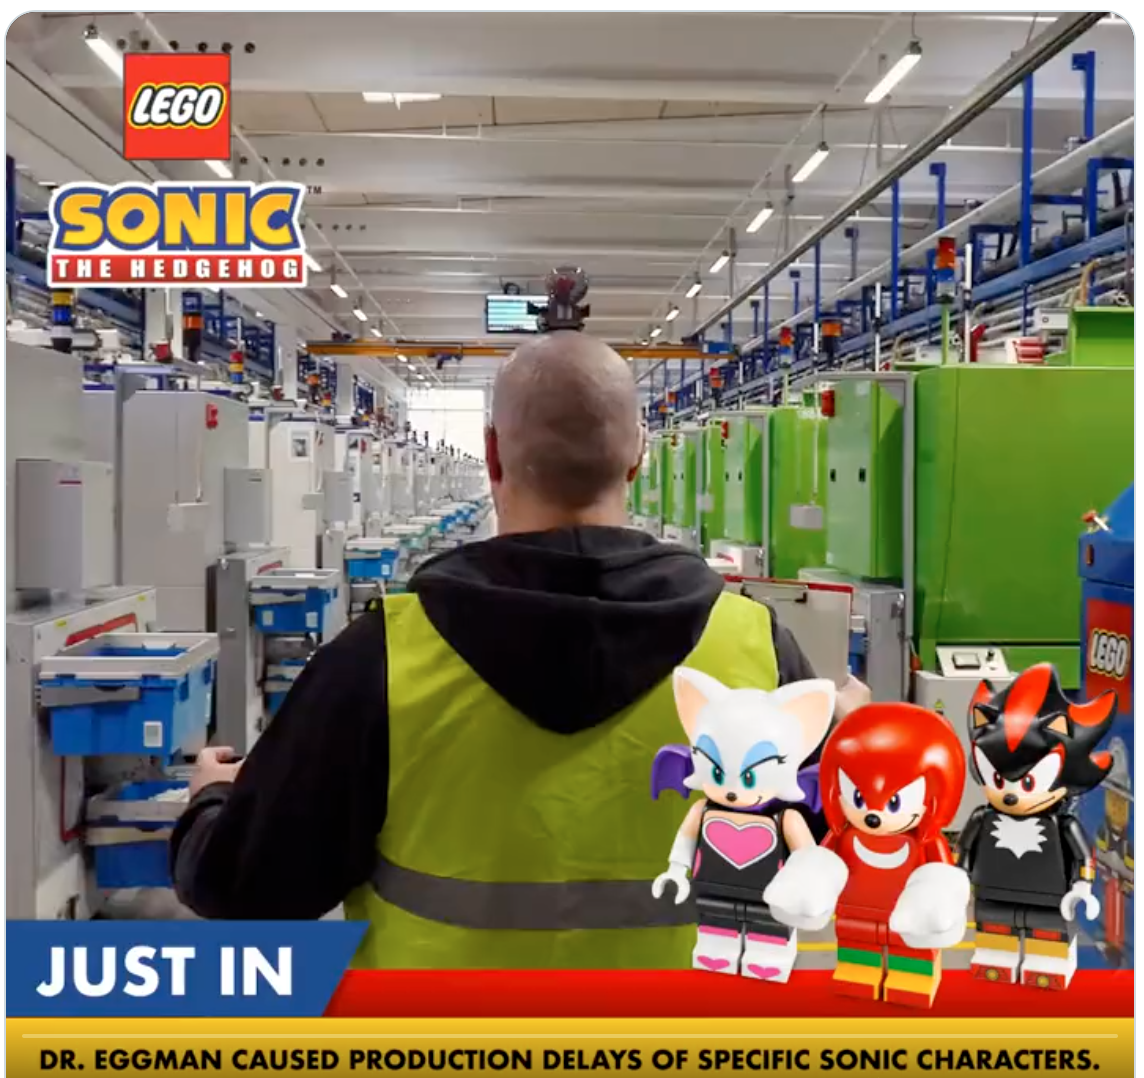 New LEGO Sonic the Hedgehog sets